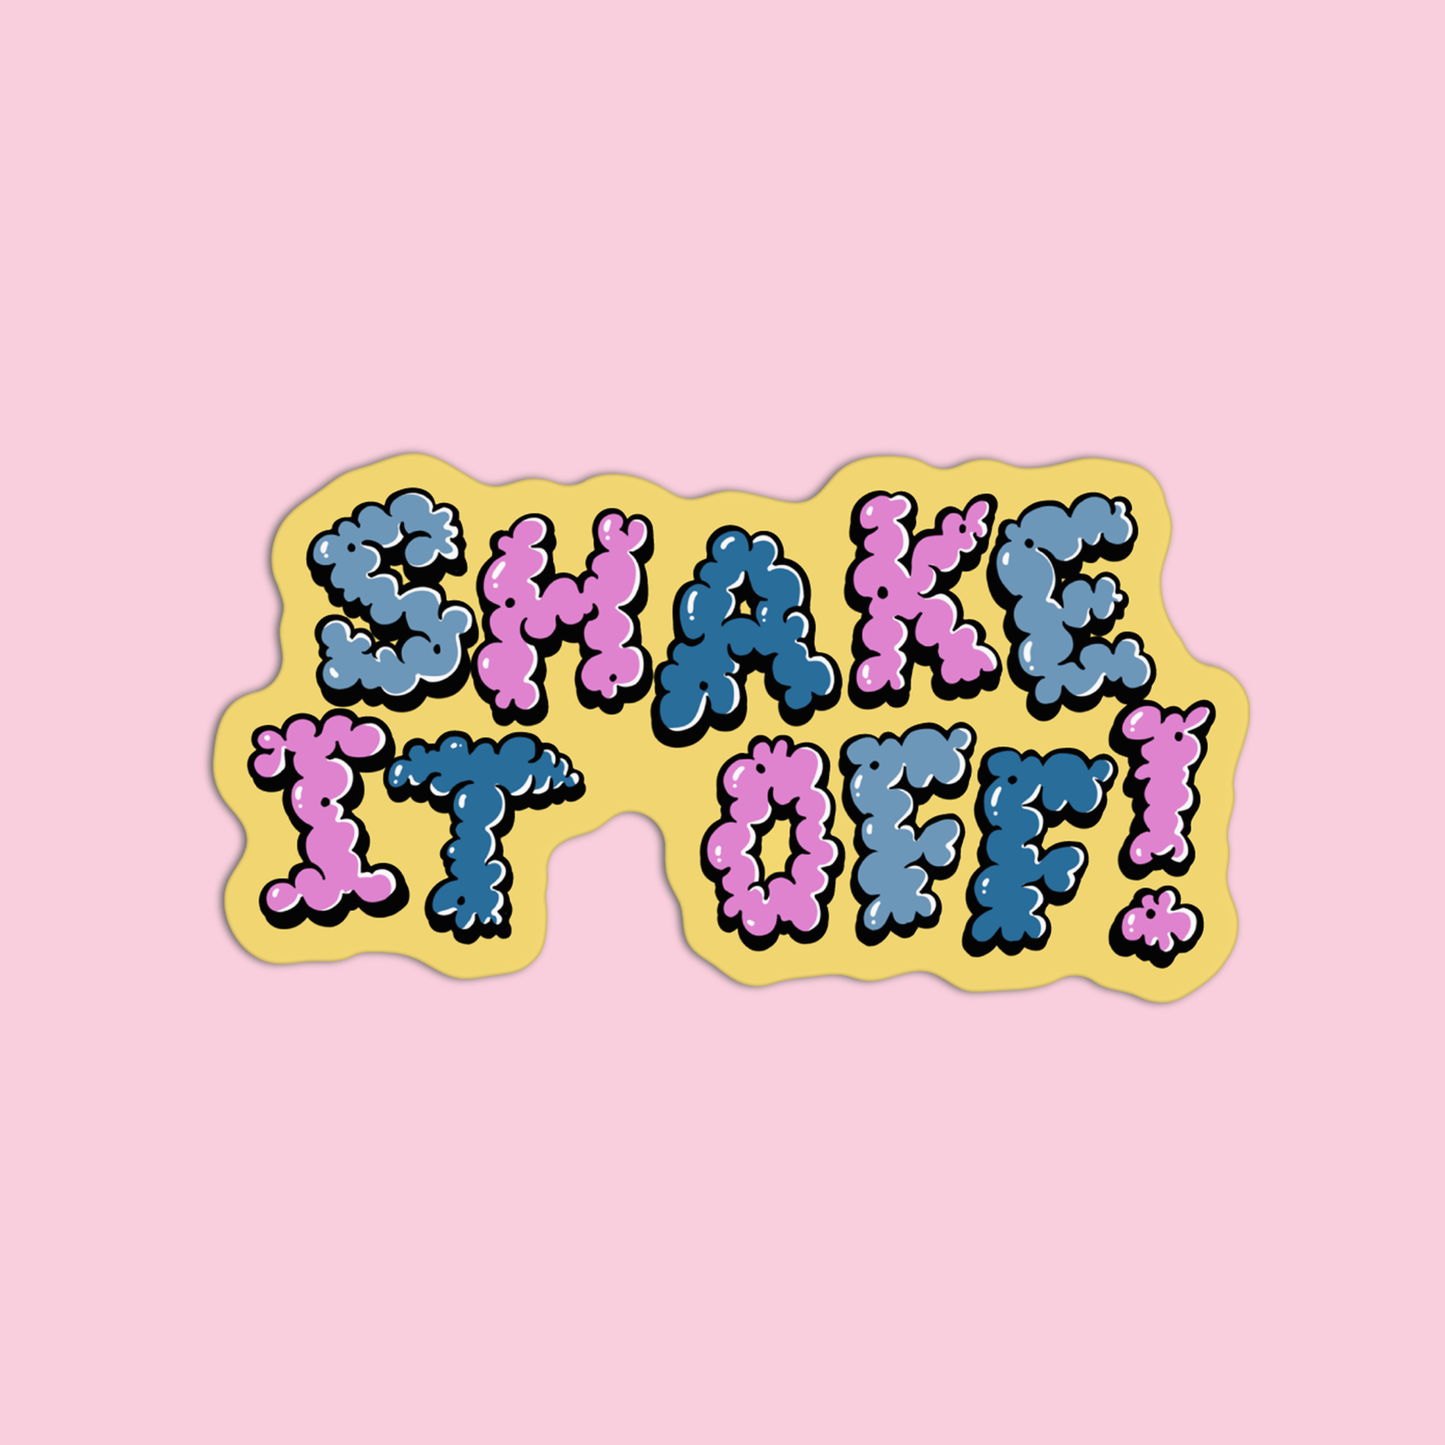 Shake It Off Sticker, Taylor Swift Sticker